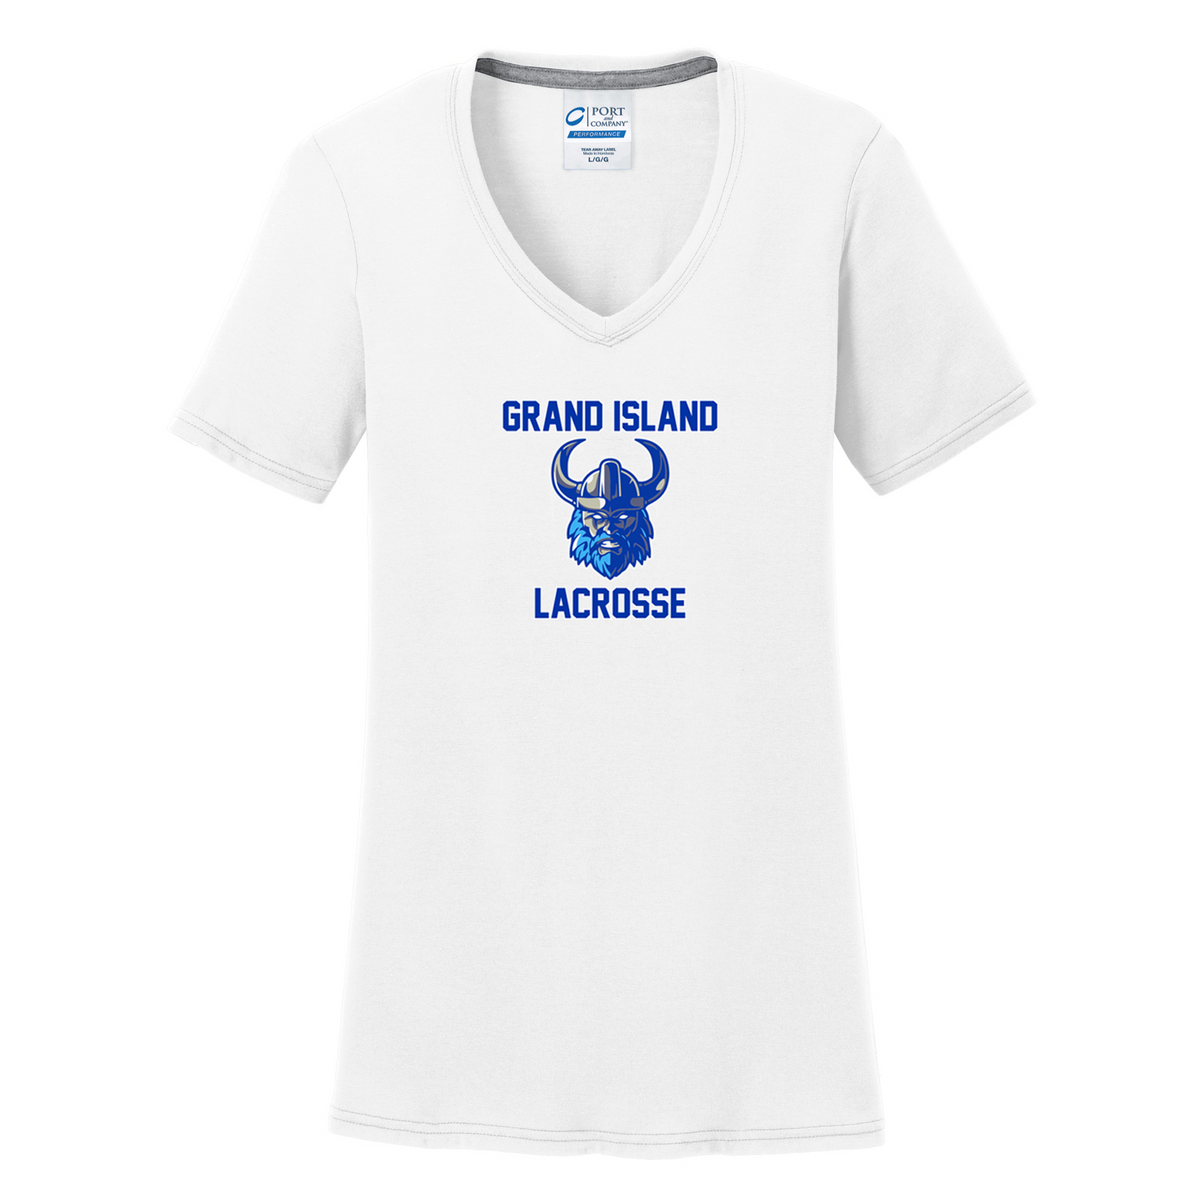 Grand Island Lacrosse Women's T-Shirt